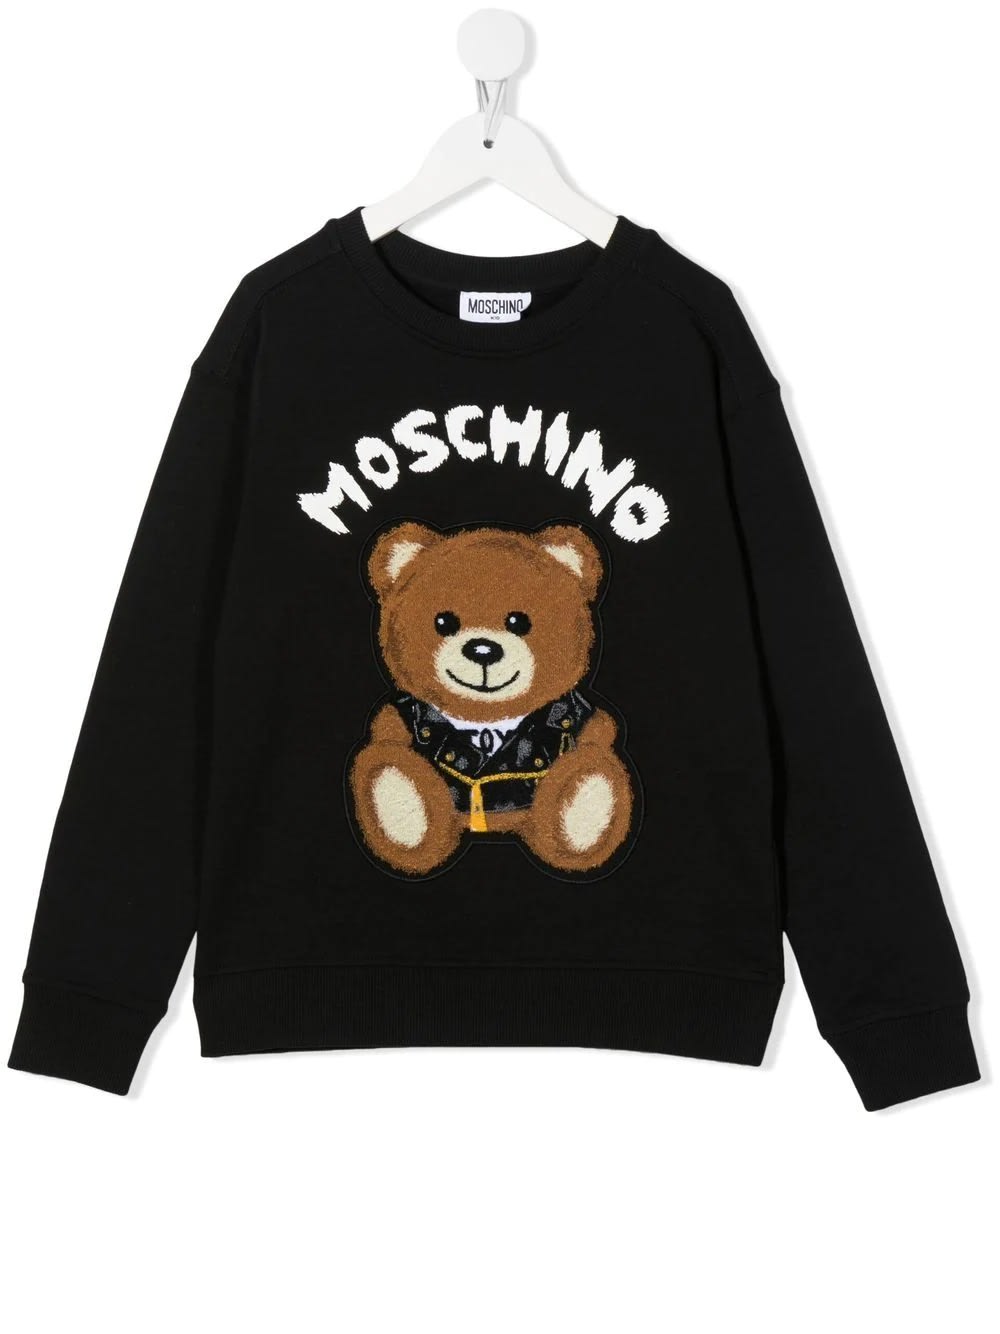 Kids Black Sweatshirt With Moschino Teddy Bear Embroidery